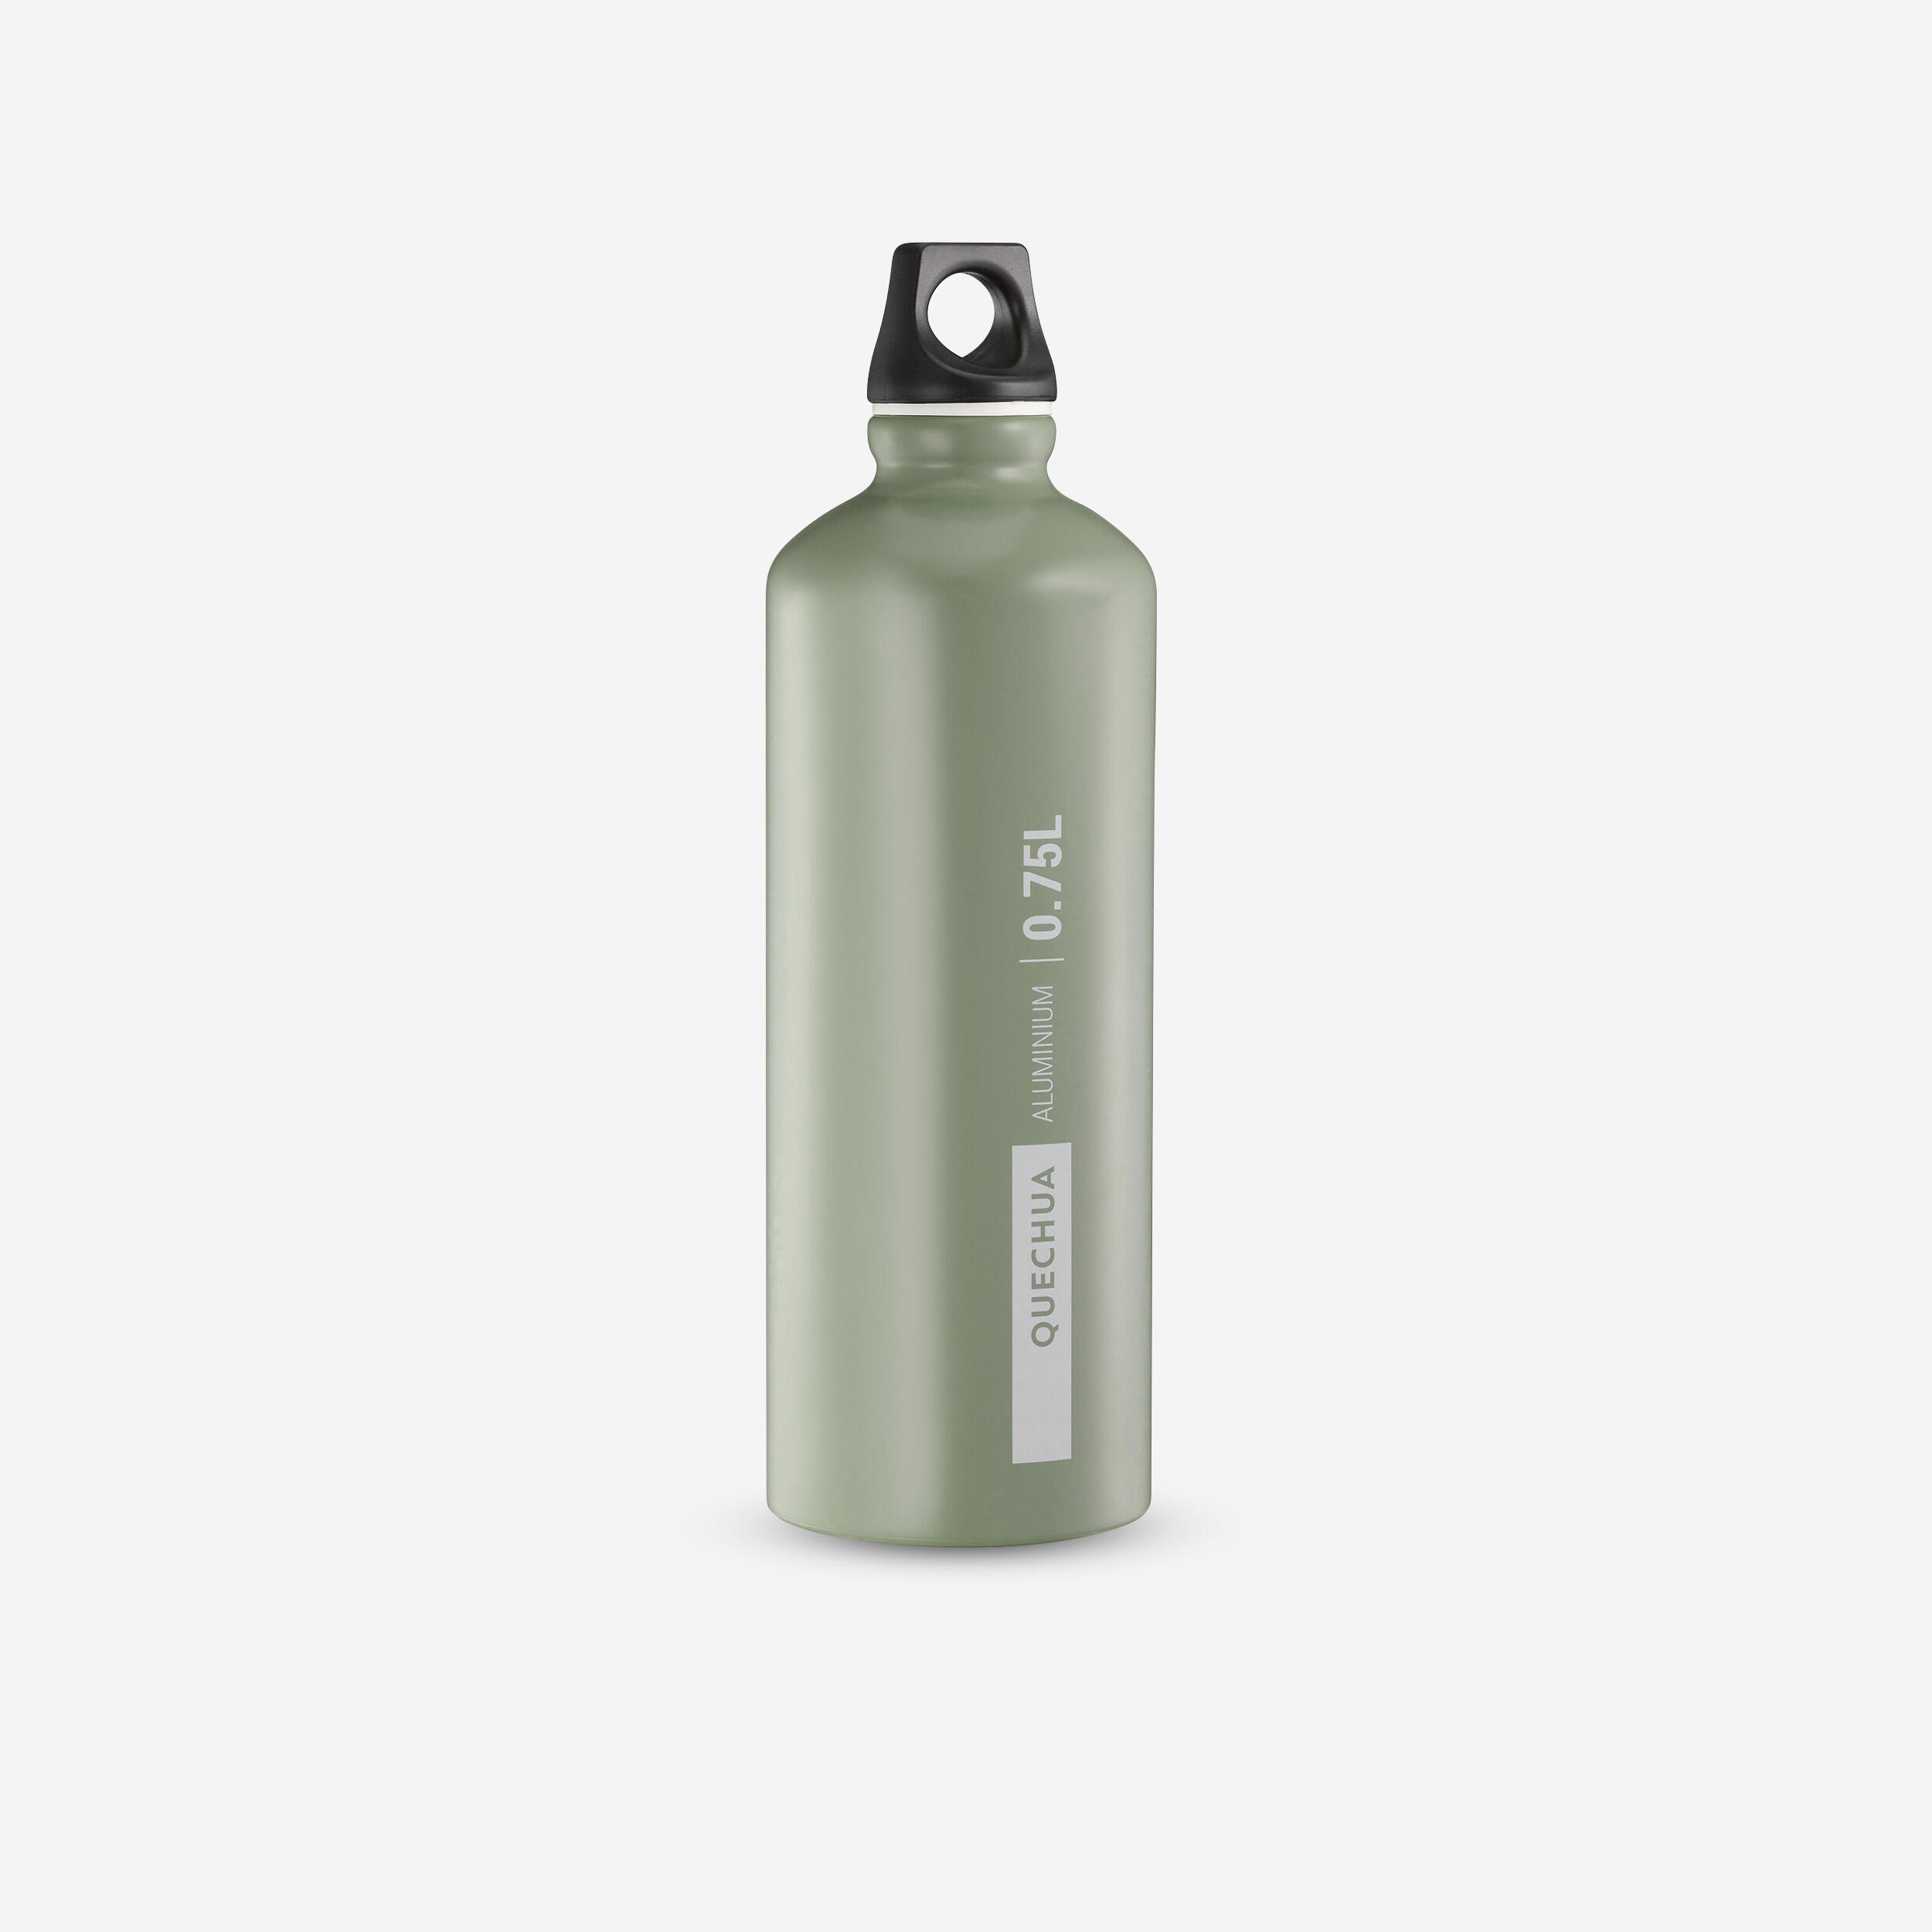 Aluminium Flask 0.75 L with Screw Cap for Hiking 1/6